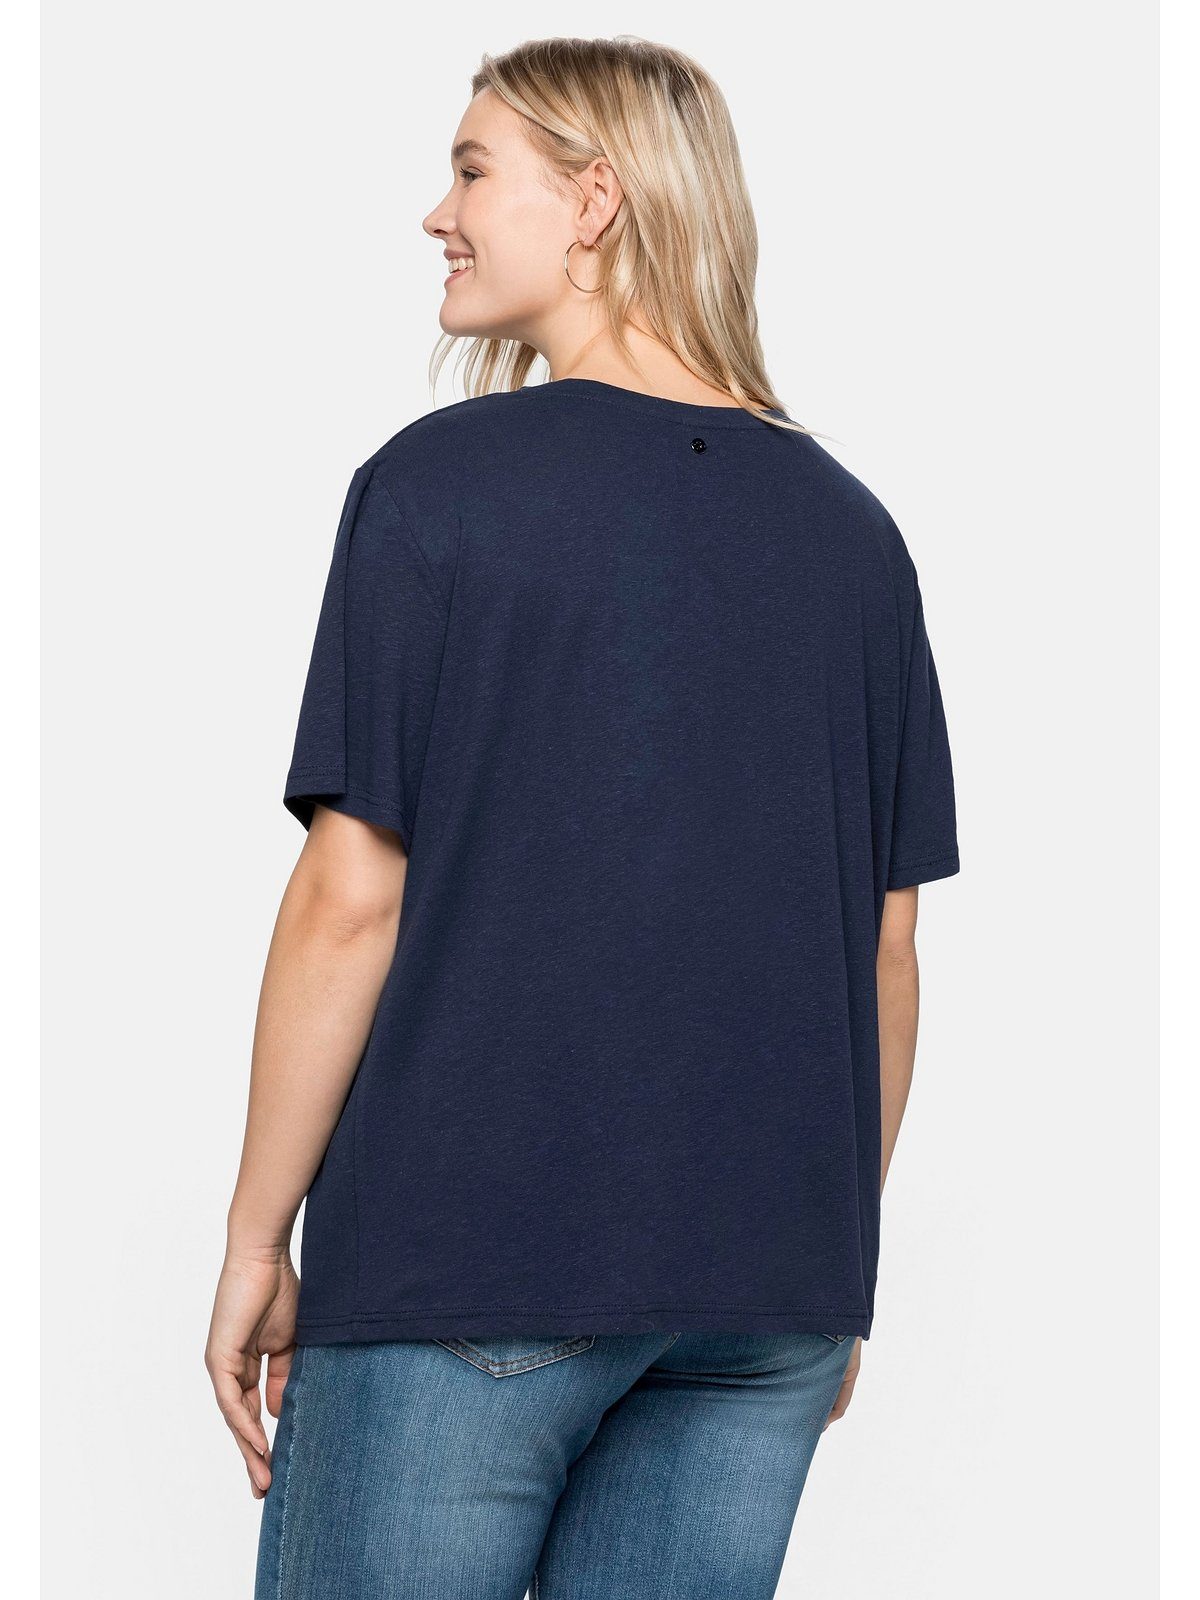 edlem Große aus marine Leinen-Viskose-Mix Größen Sheego T-Shirt